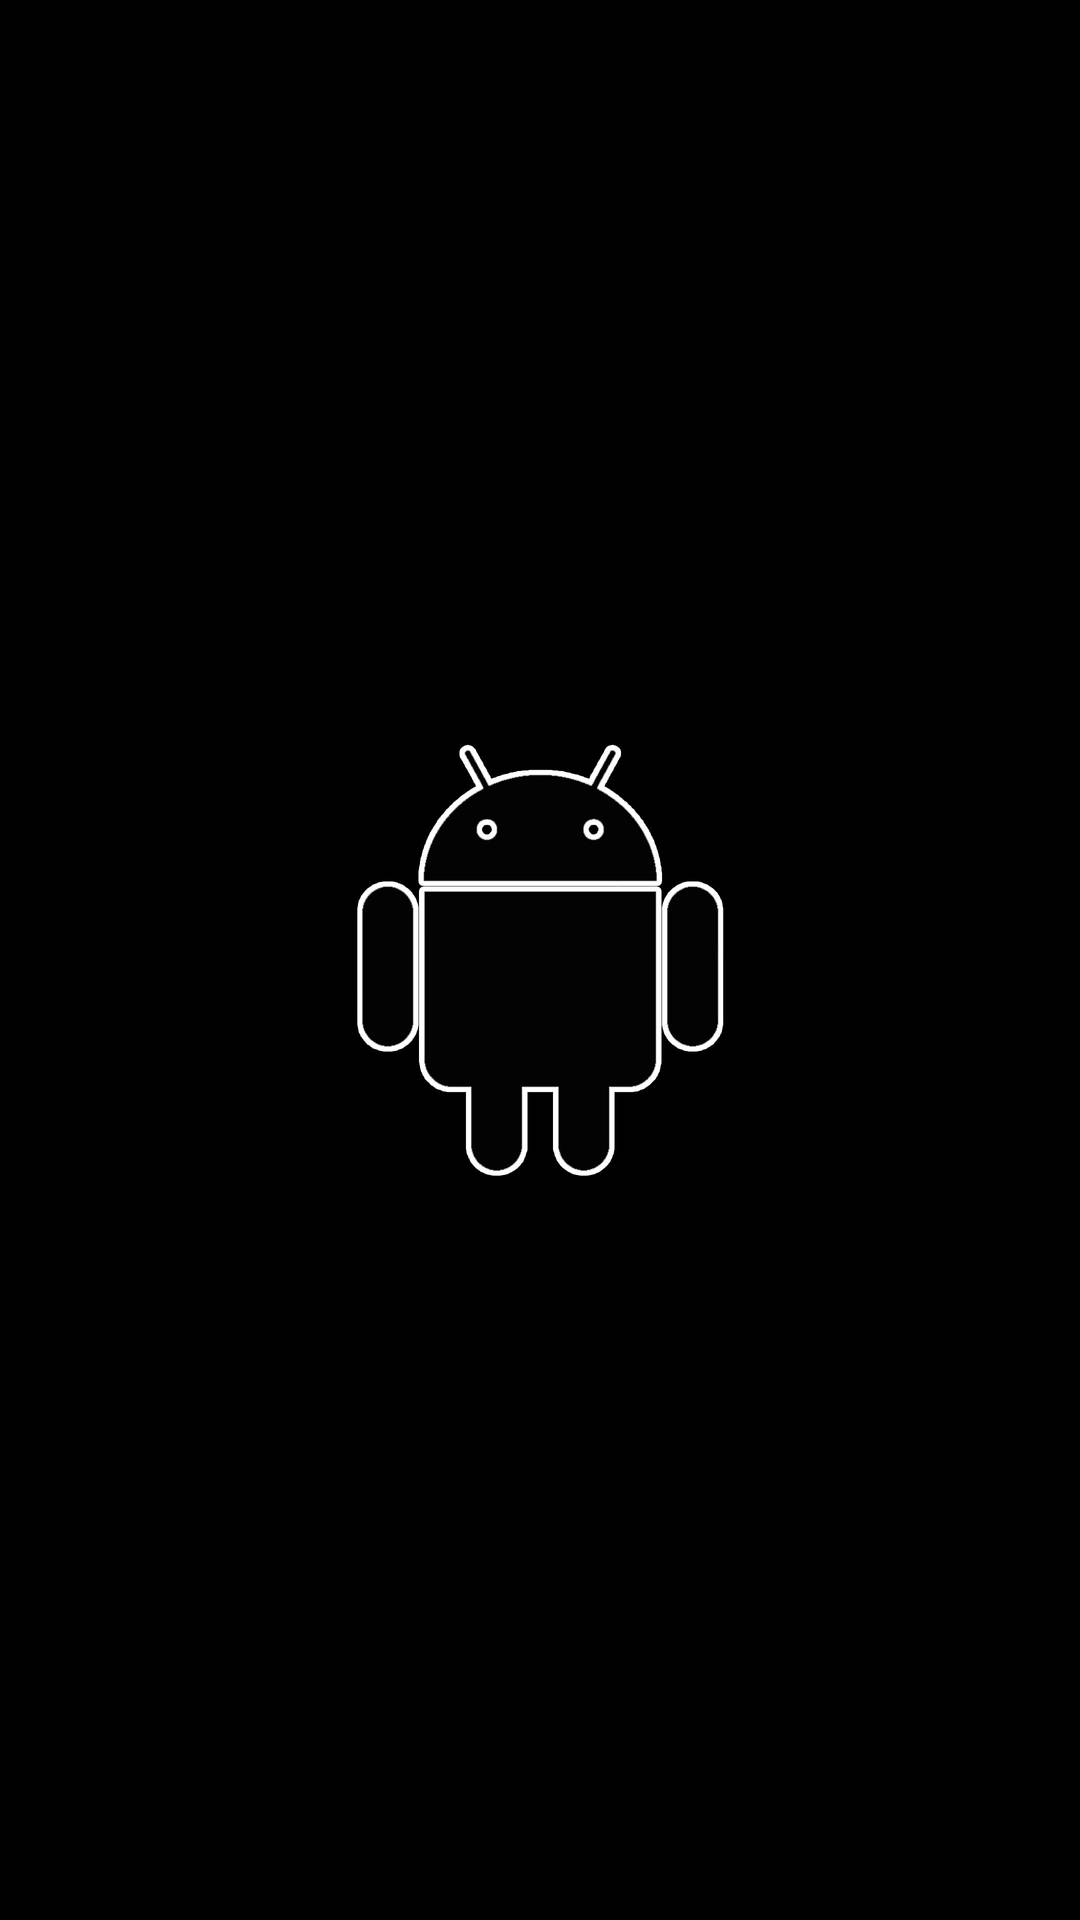 Android Samsung Black Wallpaper